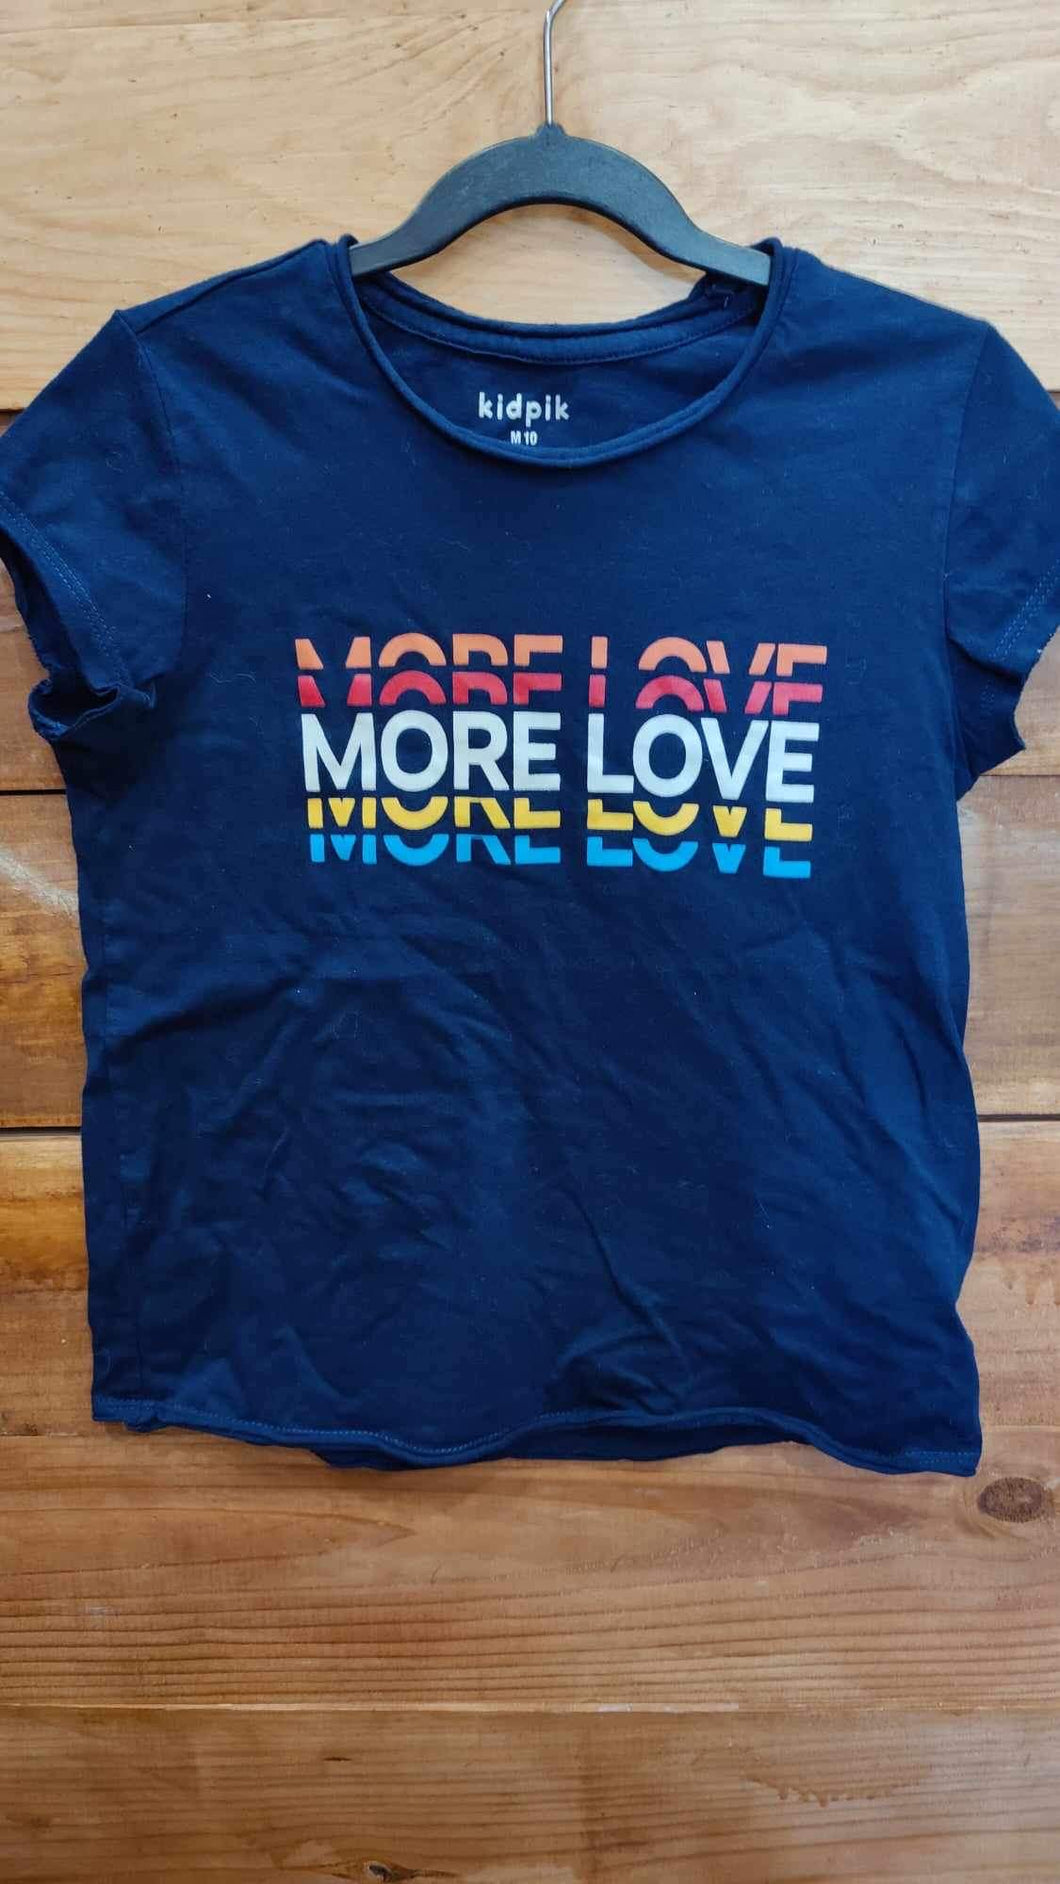 Kidpik More Love Shirt Size 10